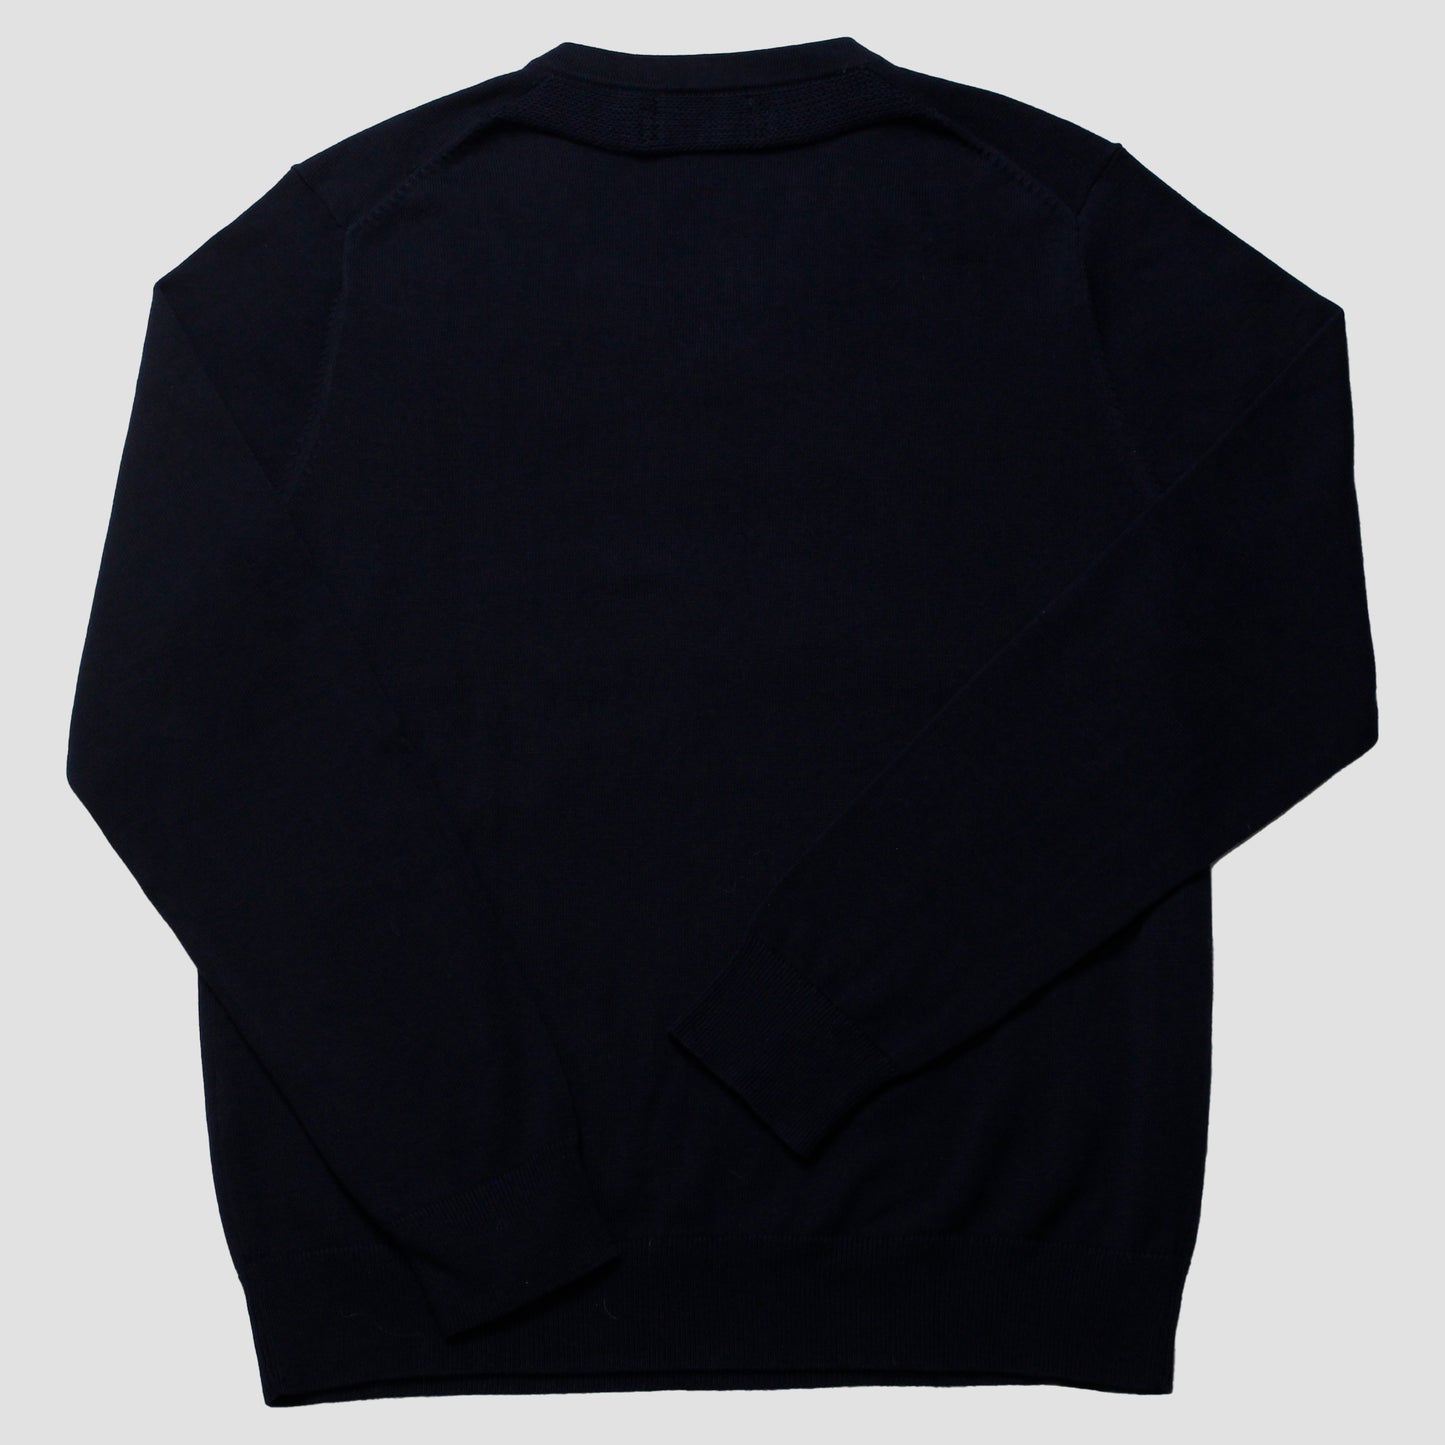 "BUDD'S BLUES//DIE LIKE DWYER" Pullover Sweater (M)